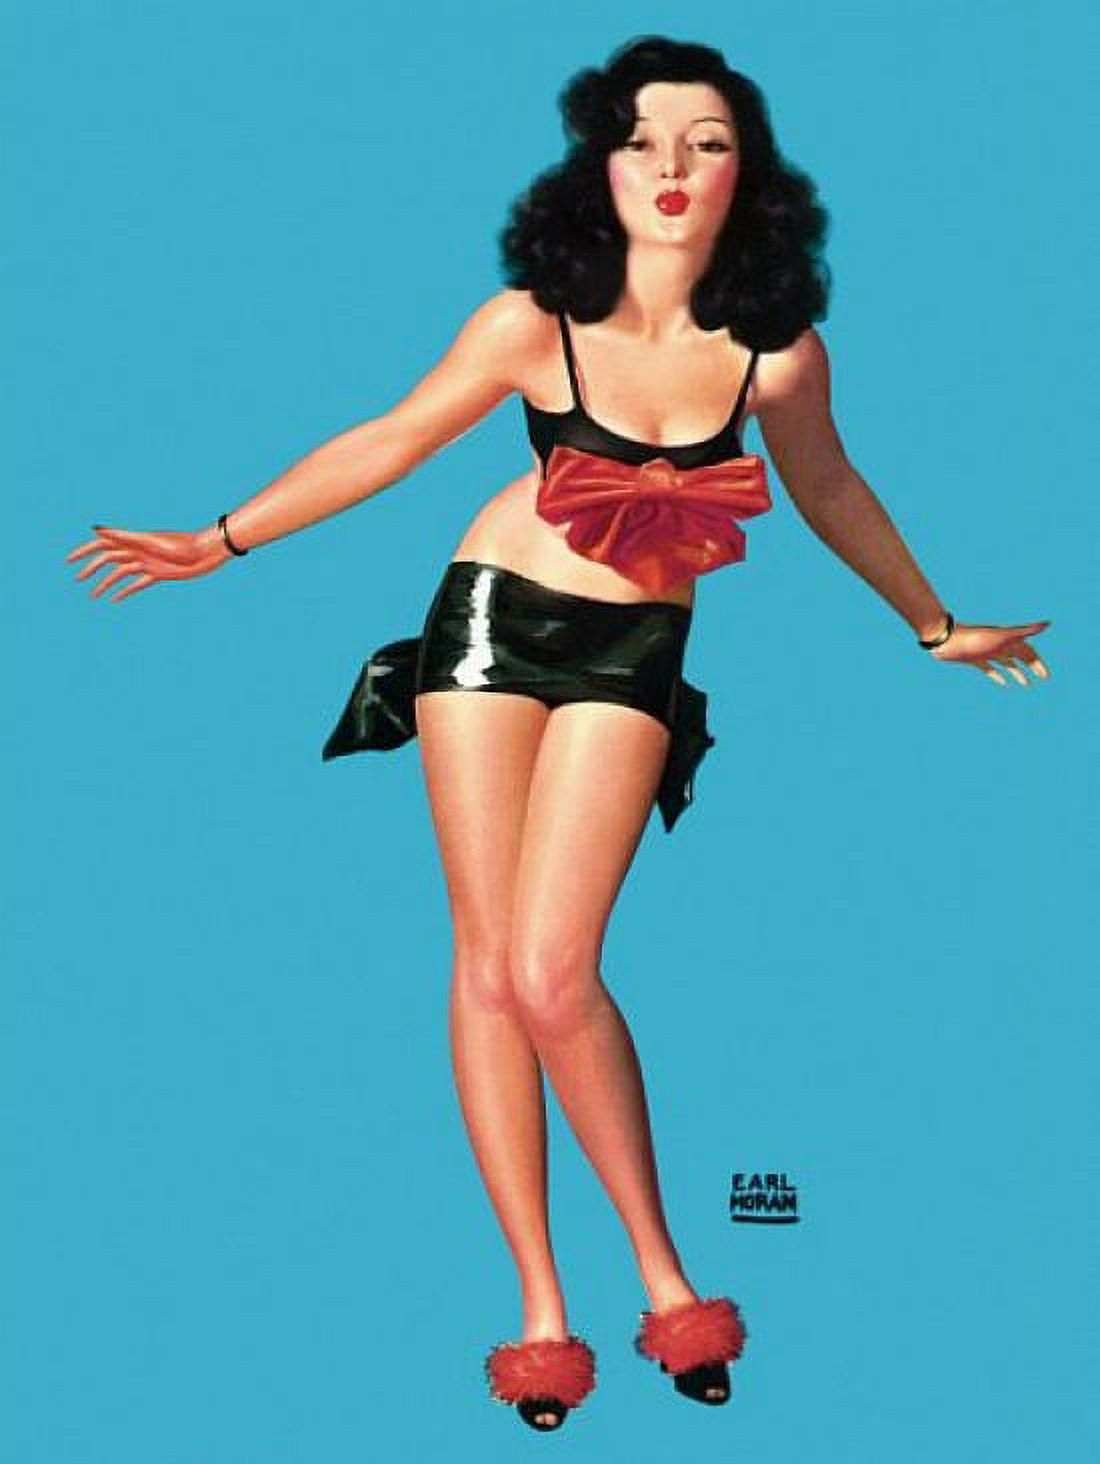 Pin Up Vintage Pinup Girl Poster Print (24 x 36) - image 1 of 1